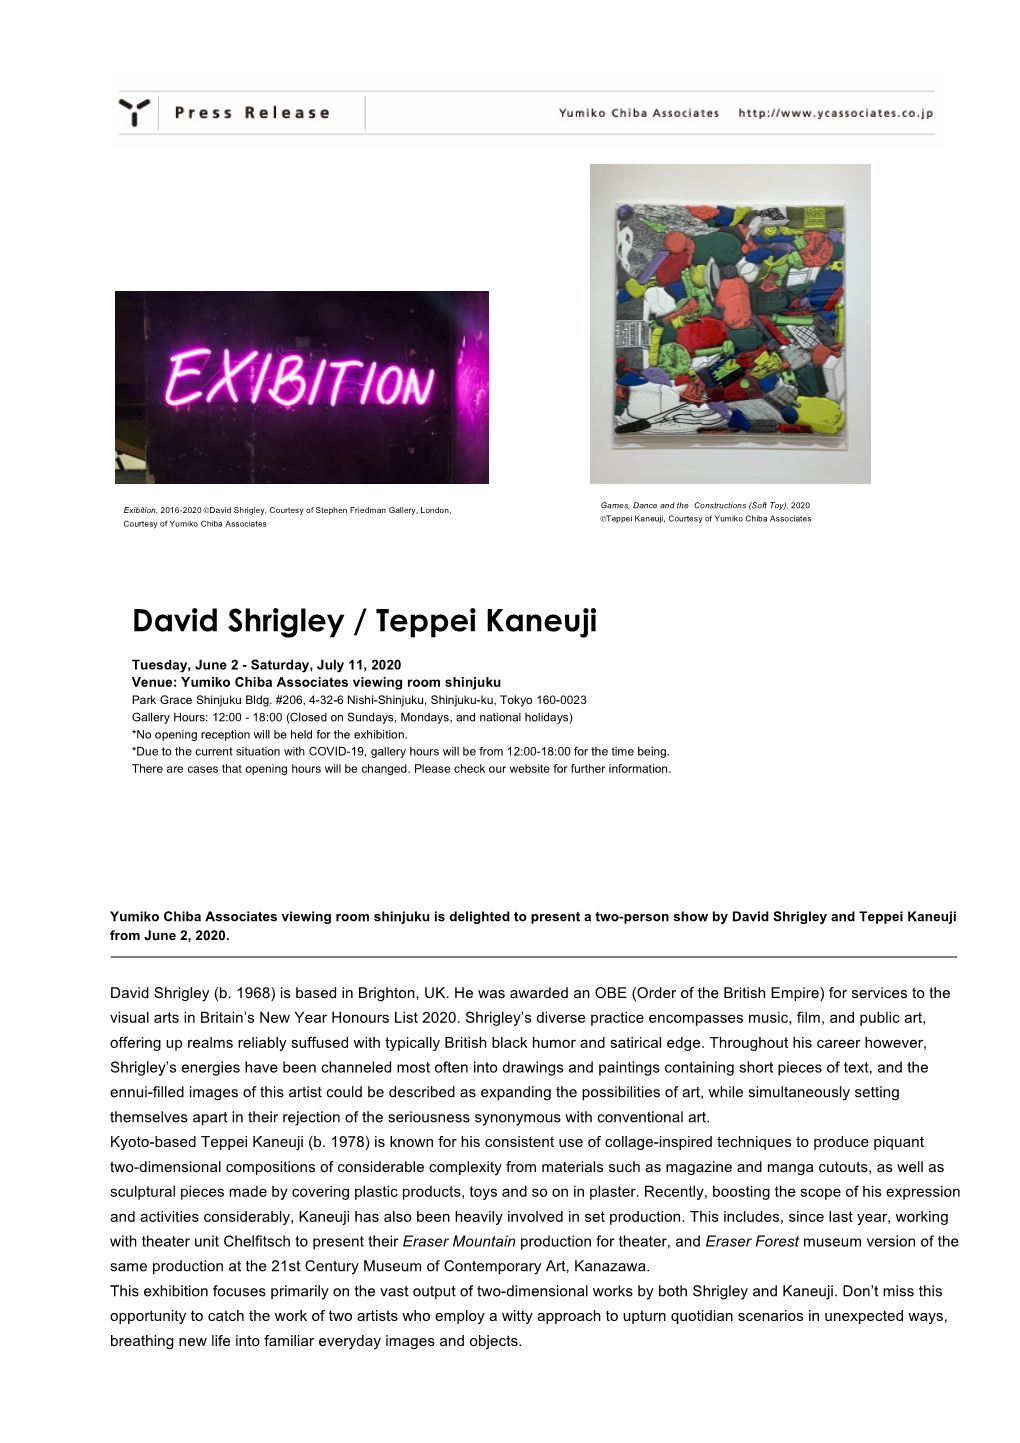 David Shrigley / Teppei Kaneuji